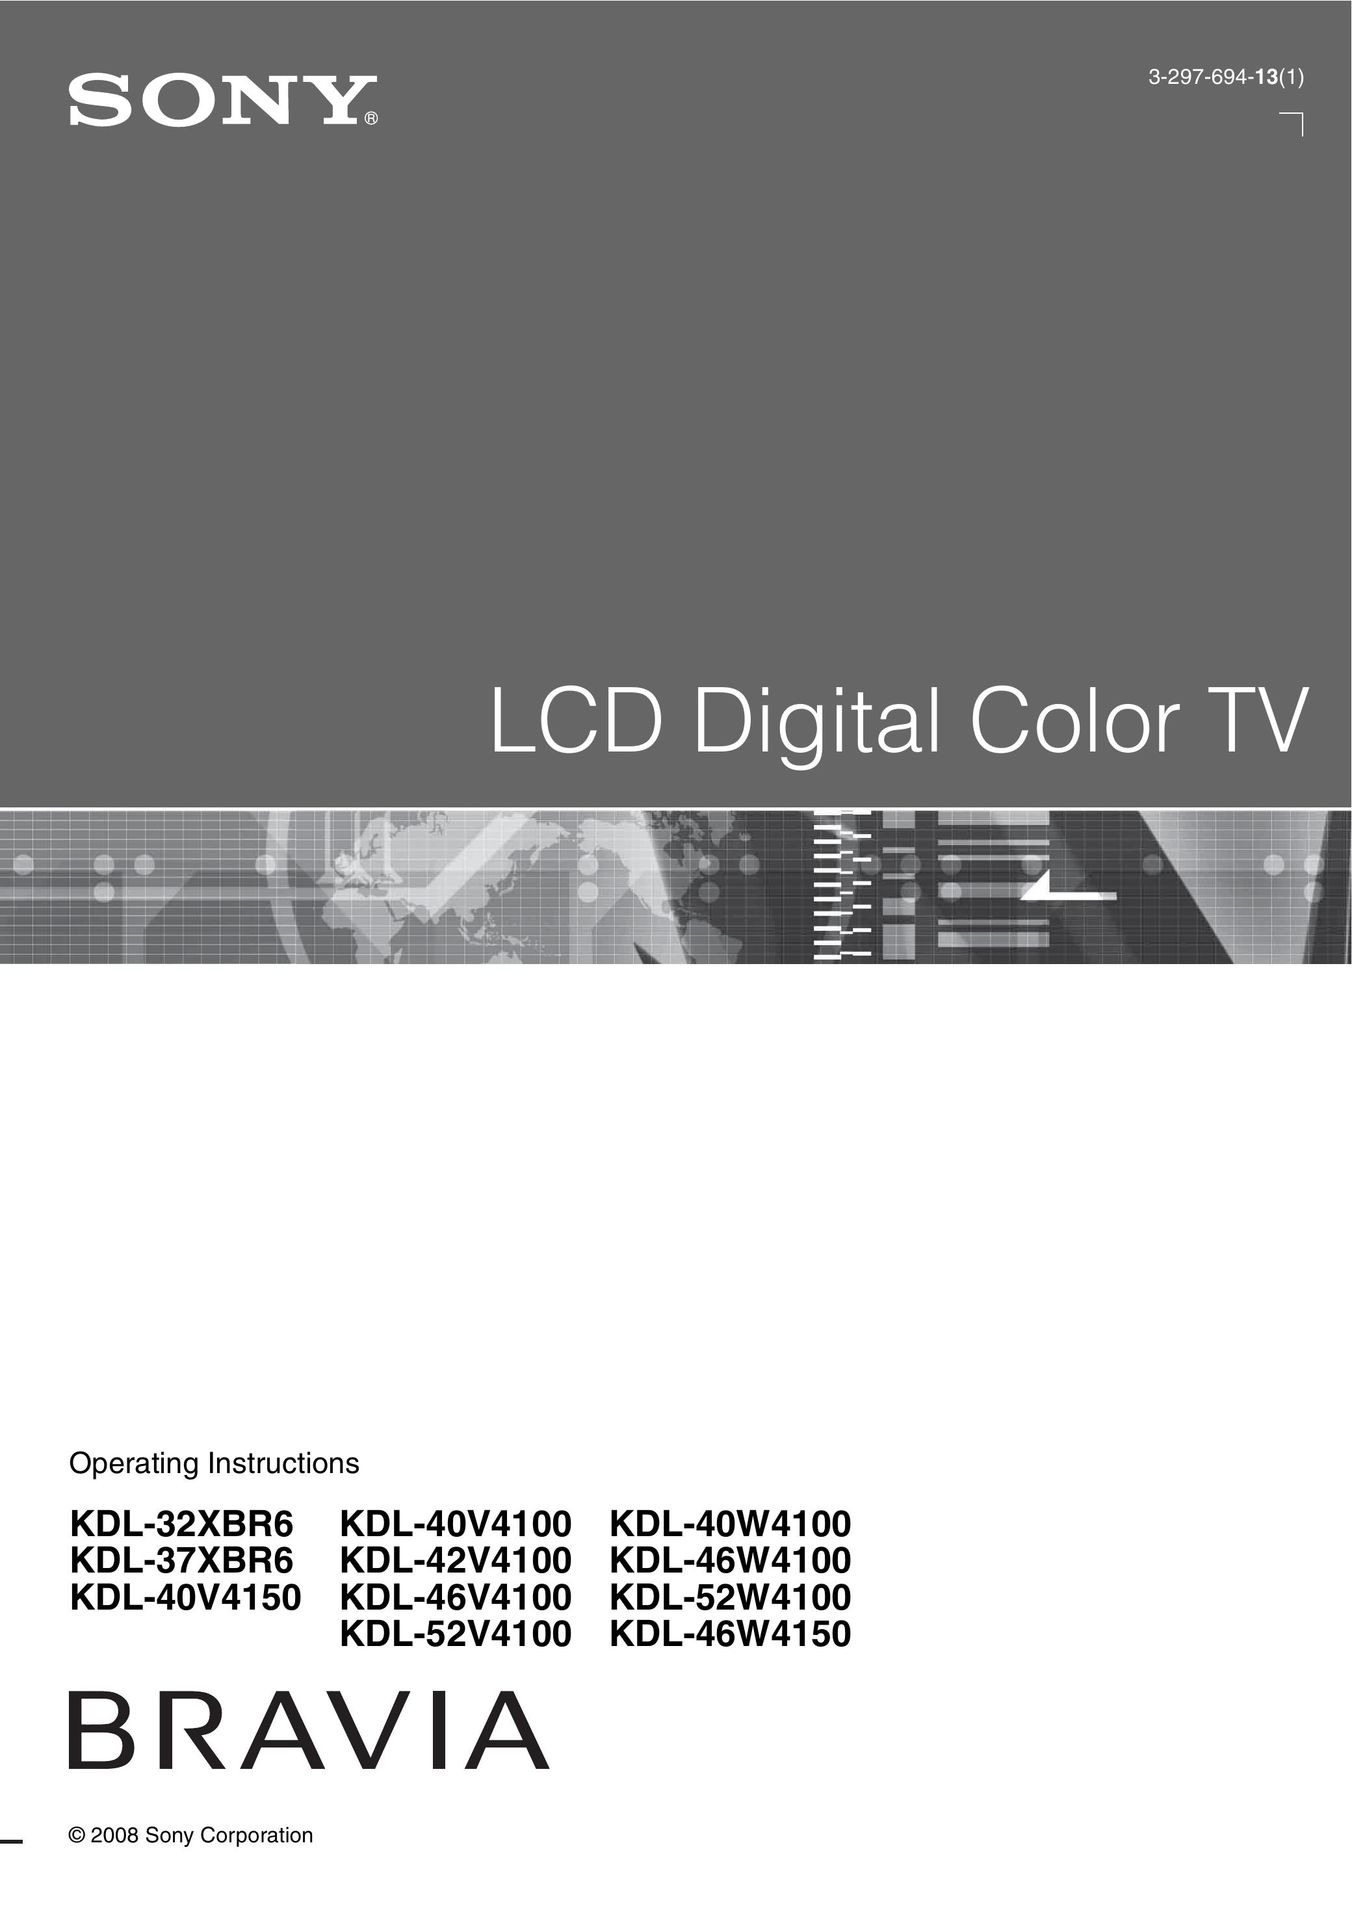 Sony KDL-46W4100 Beverage Dispenser User Manual